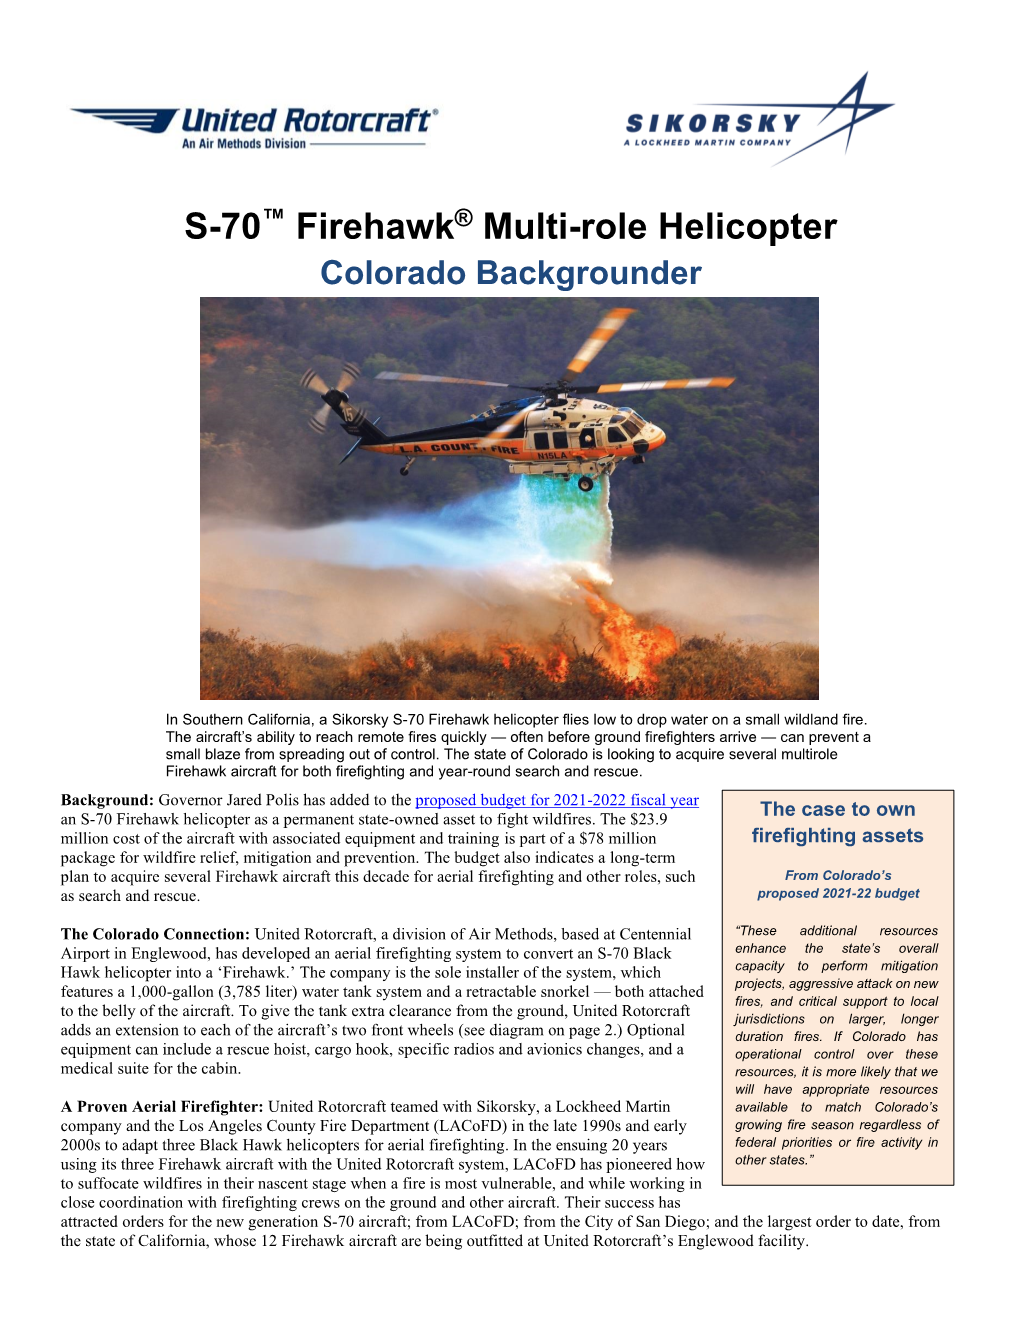 S-70 Firehawk® Multi-Role Helicopter